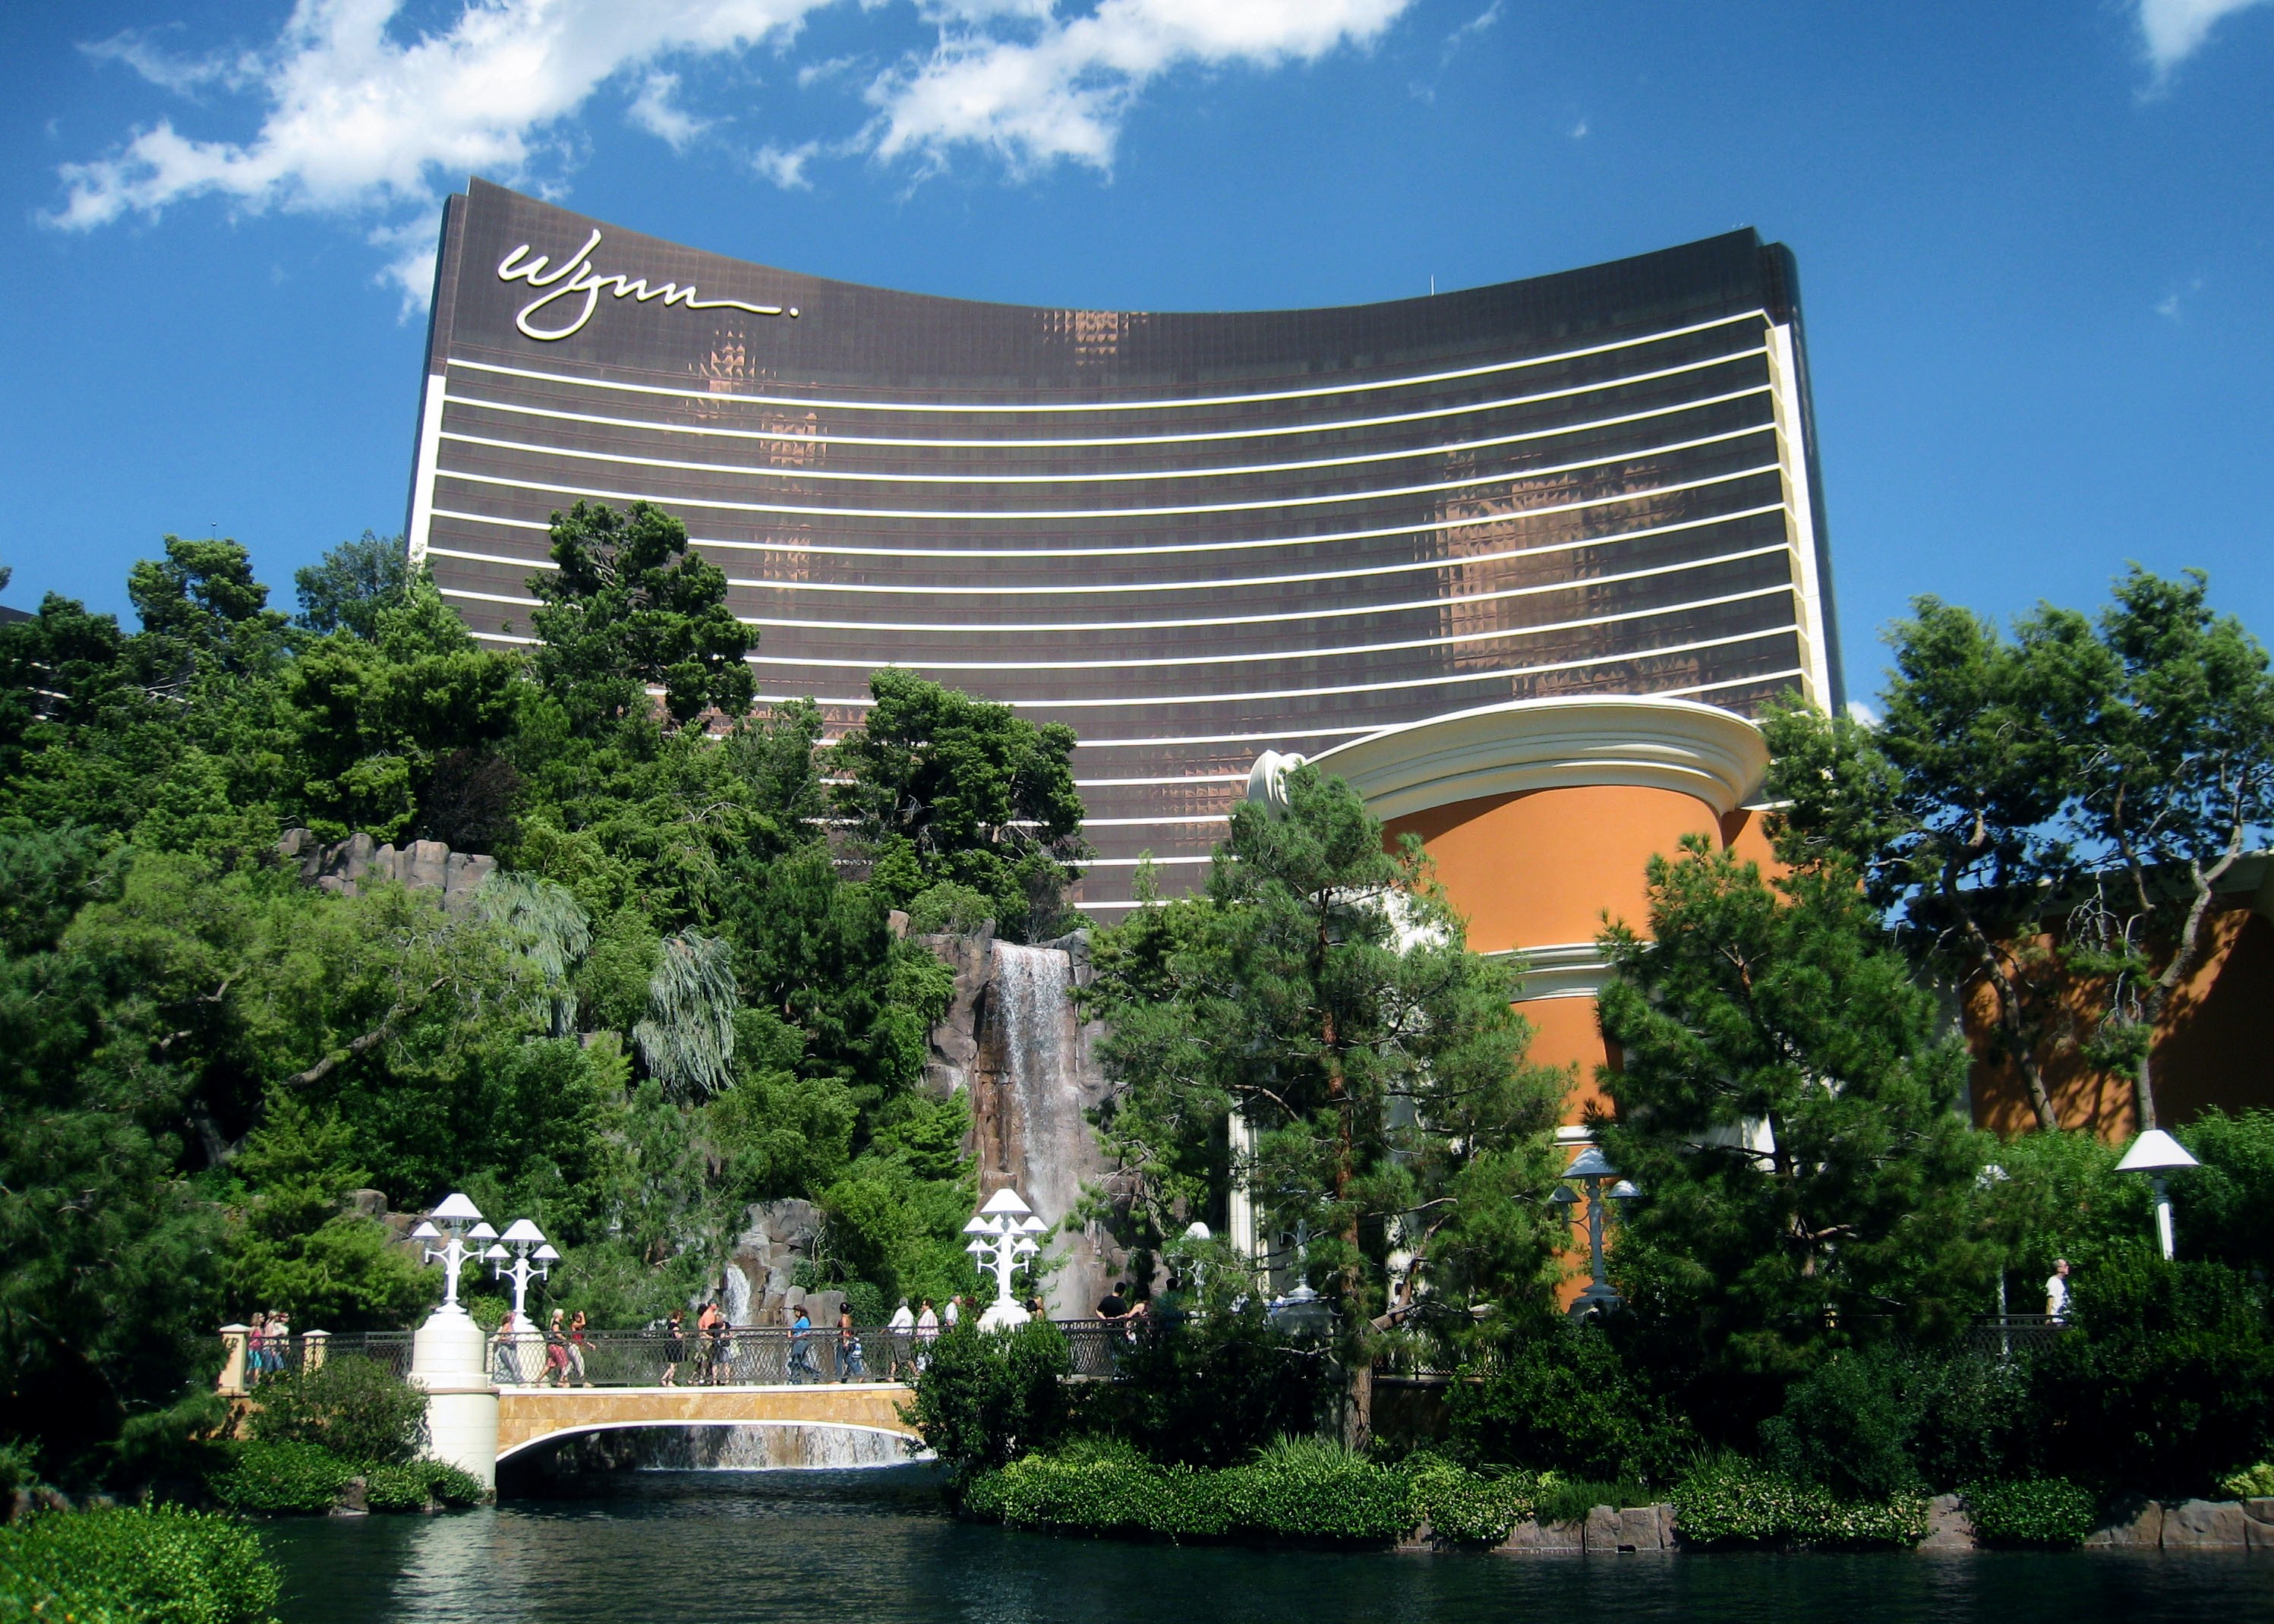 Wynn casino vegas рублевые ставки в казино